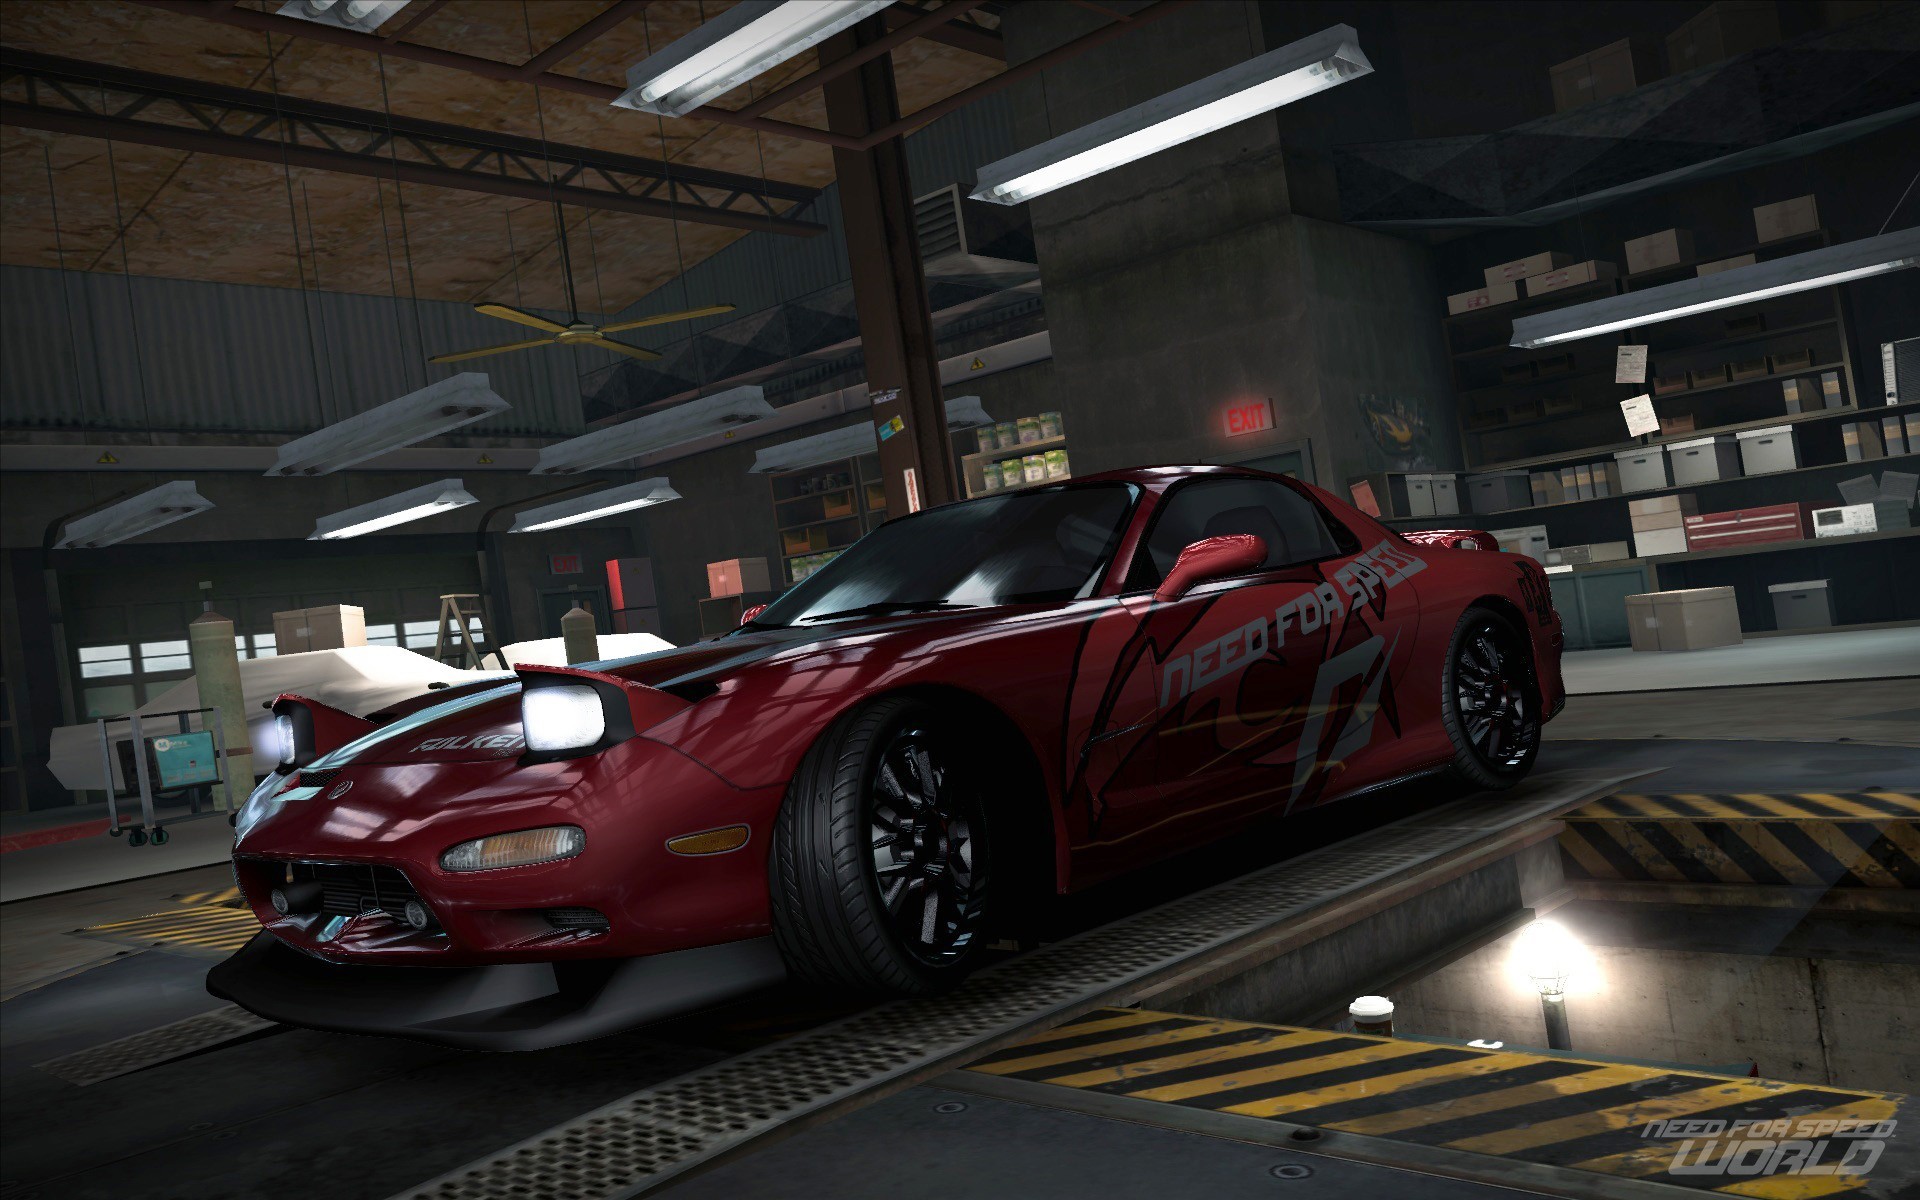 Télécharger des fonds d'écran Need For Speed: World HD